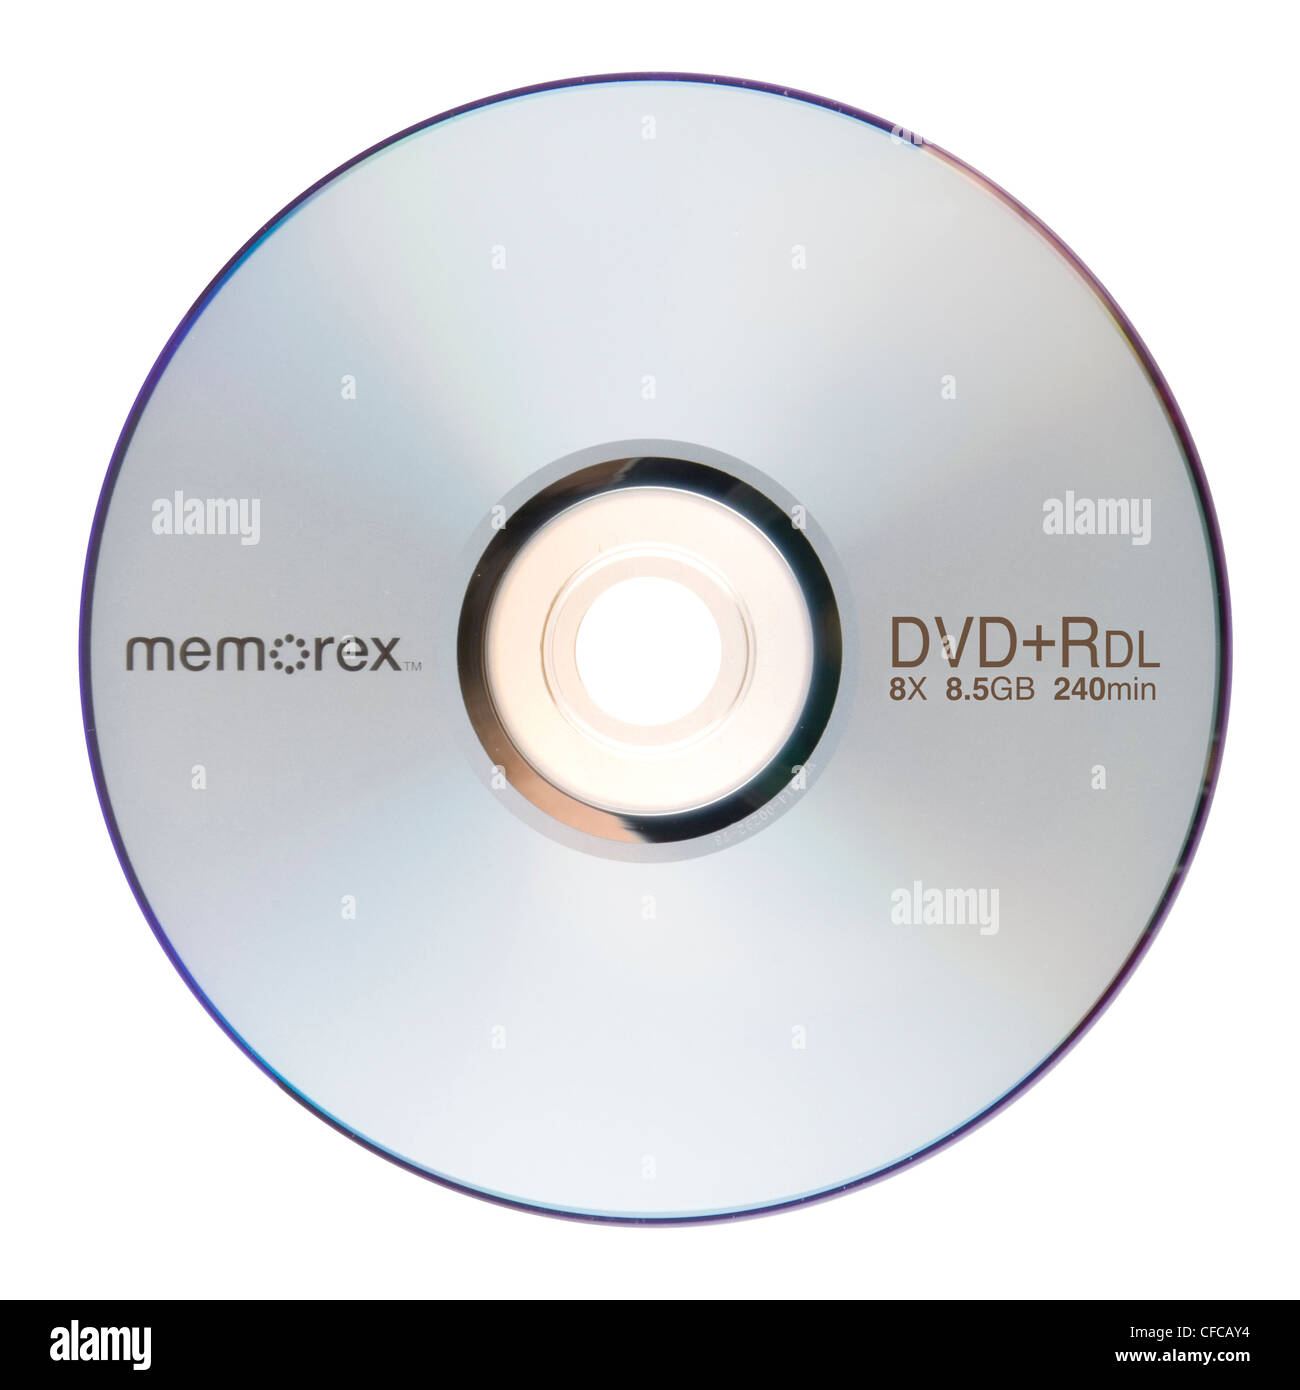 Memorex 8.5 GB DVD + R double layer Stock Photo - Alamy